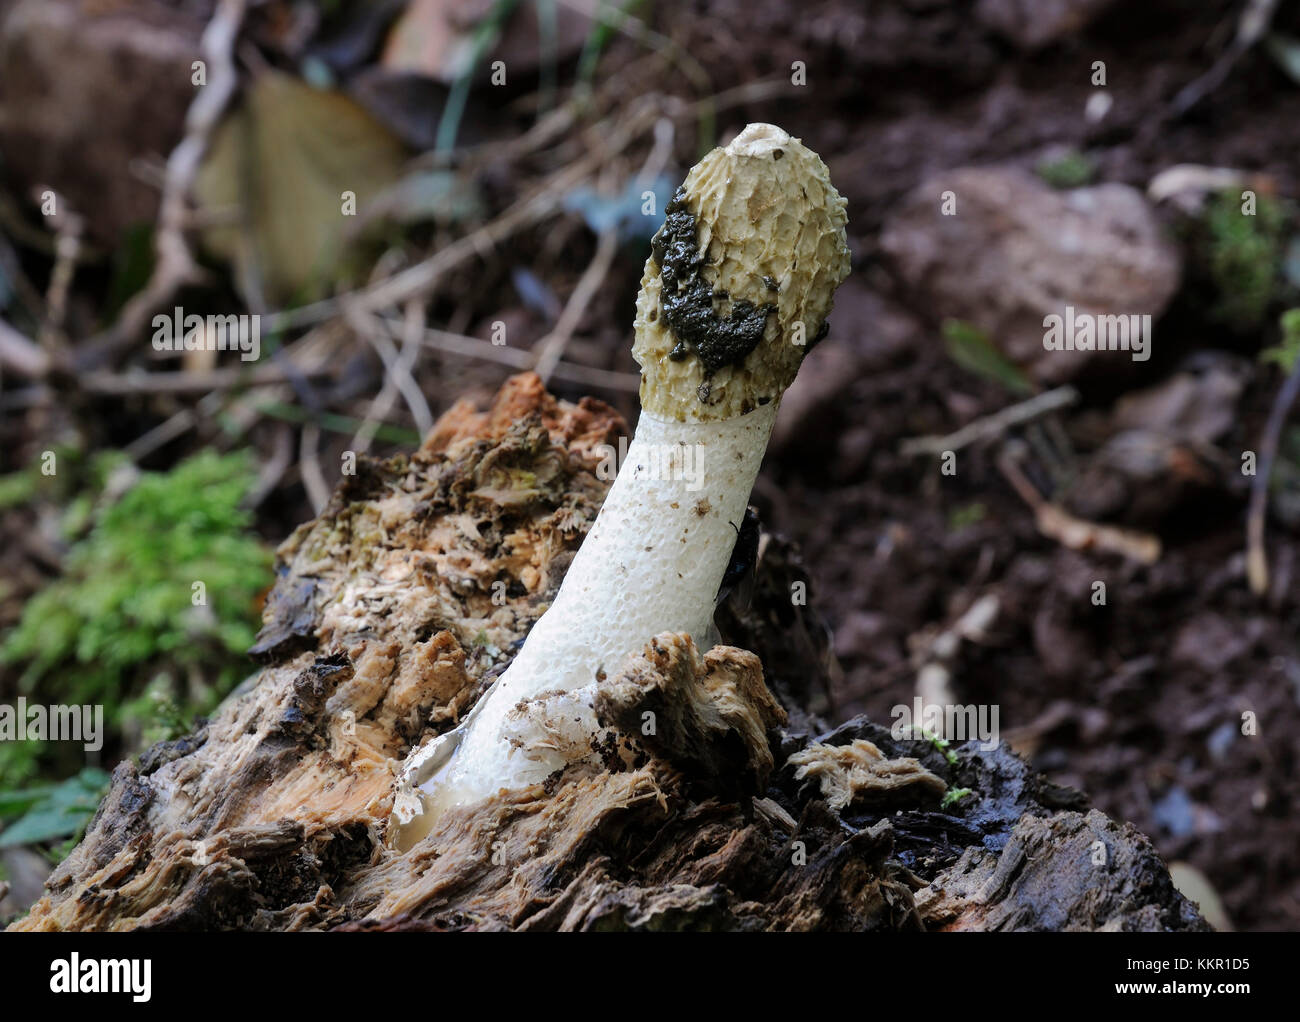 Stinkhorn Fungus - Phallus impudicus  growing on rotting wood Stock Photo